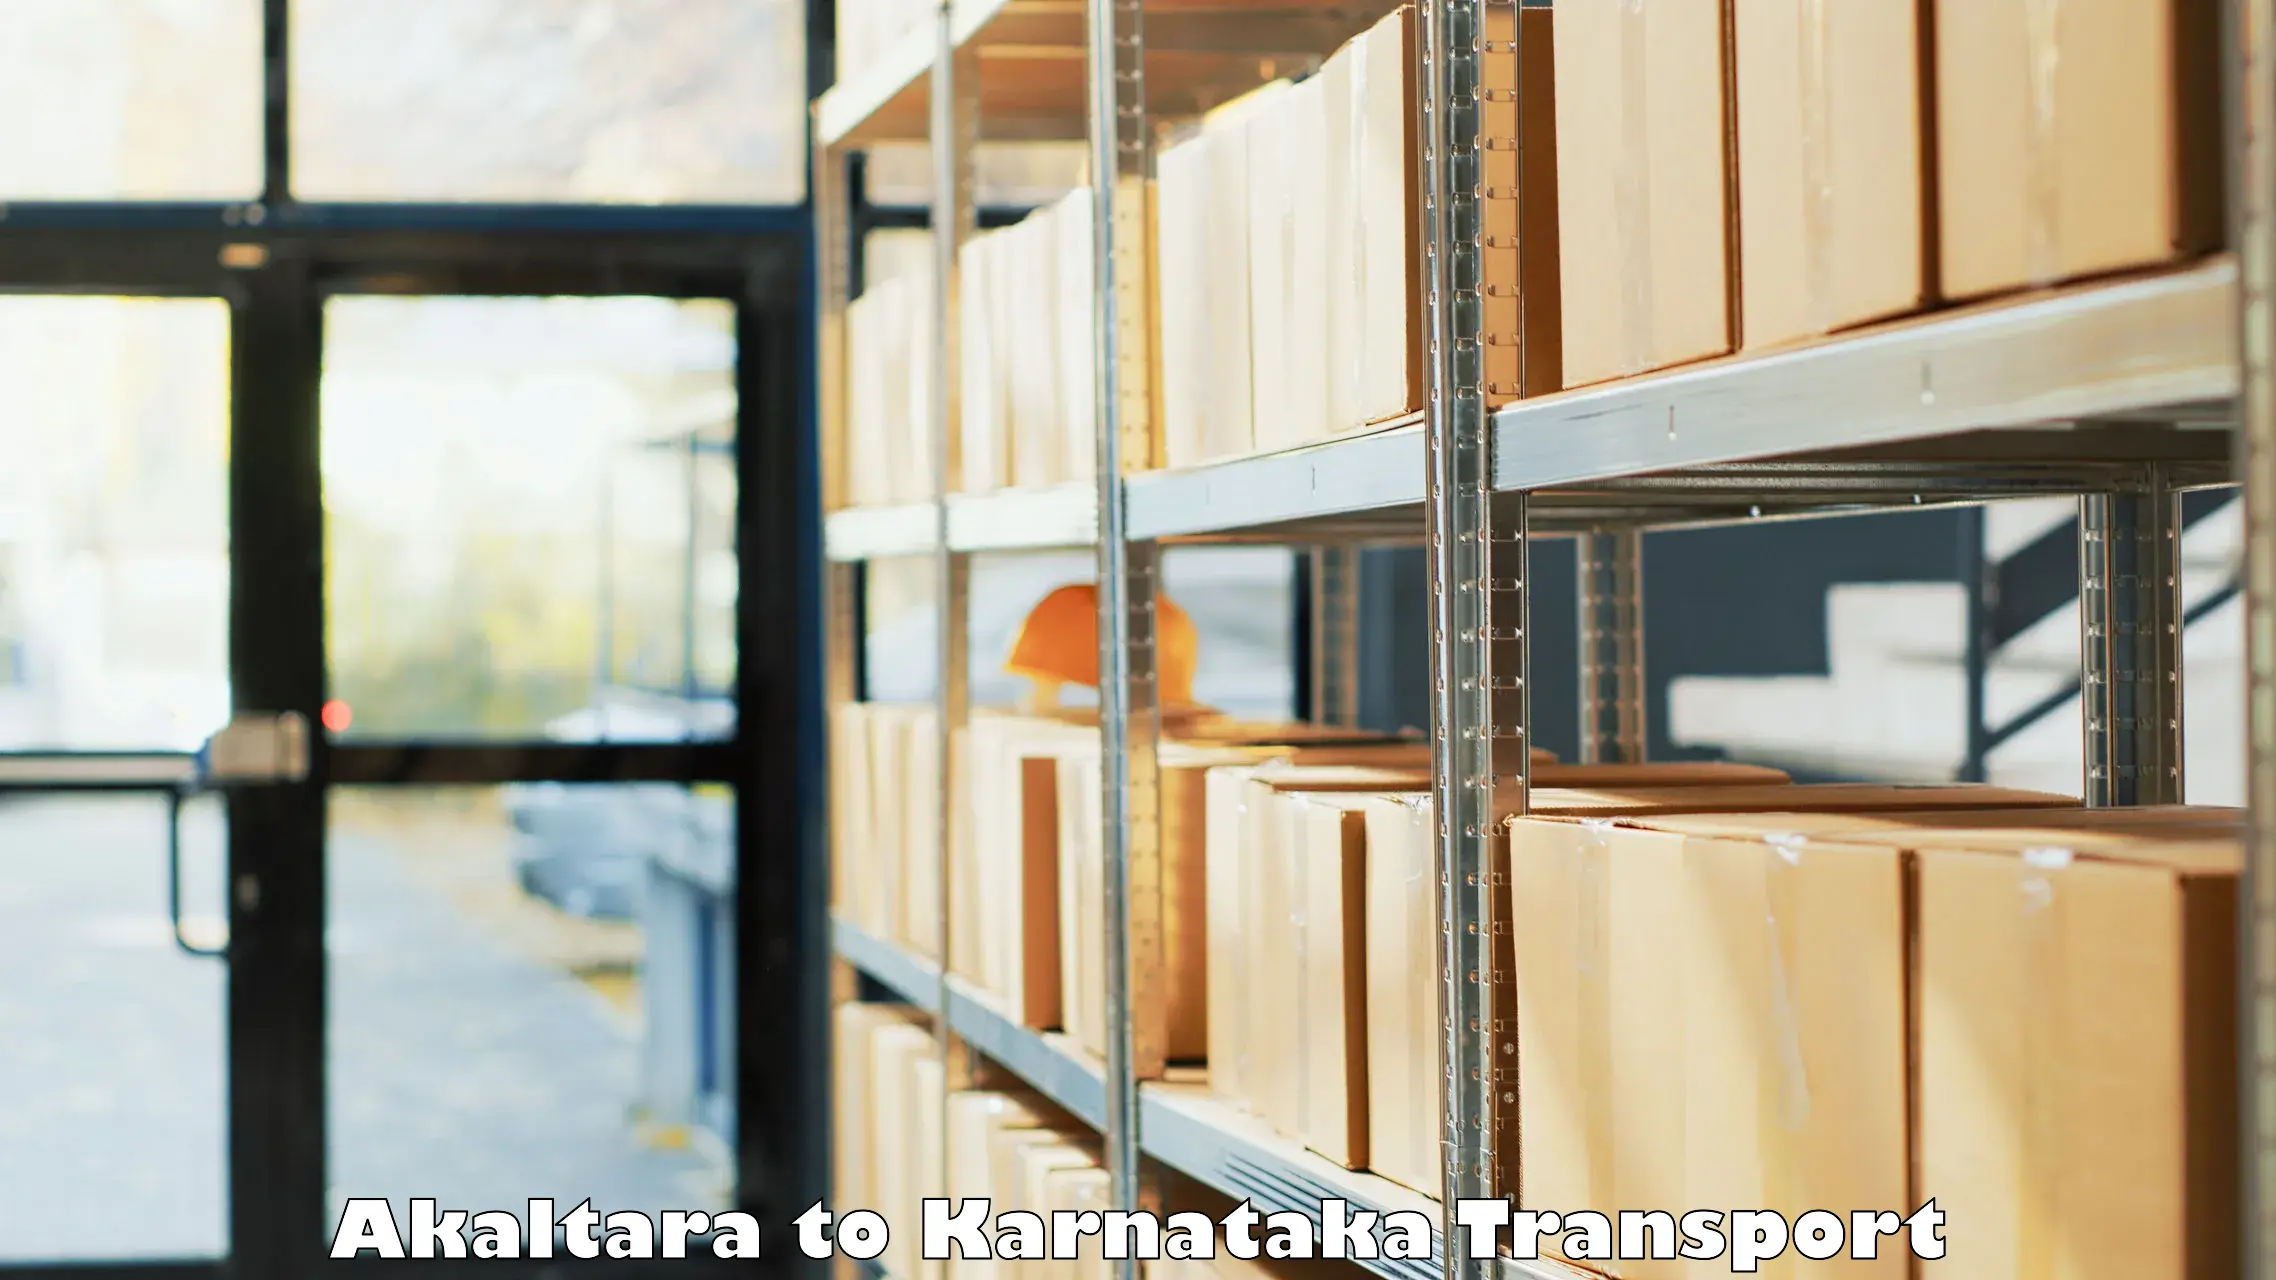 Goods delivery service Akaltara to Kulshekar